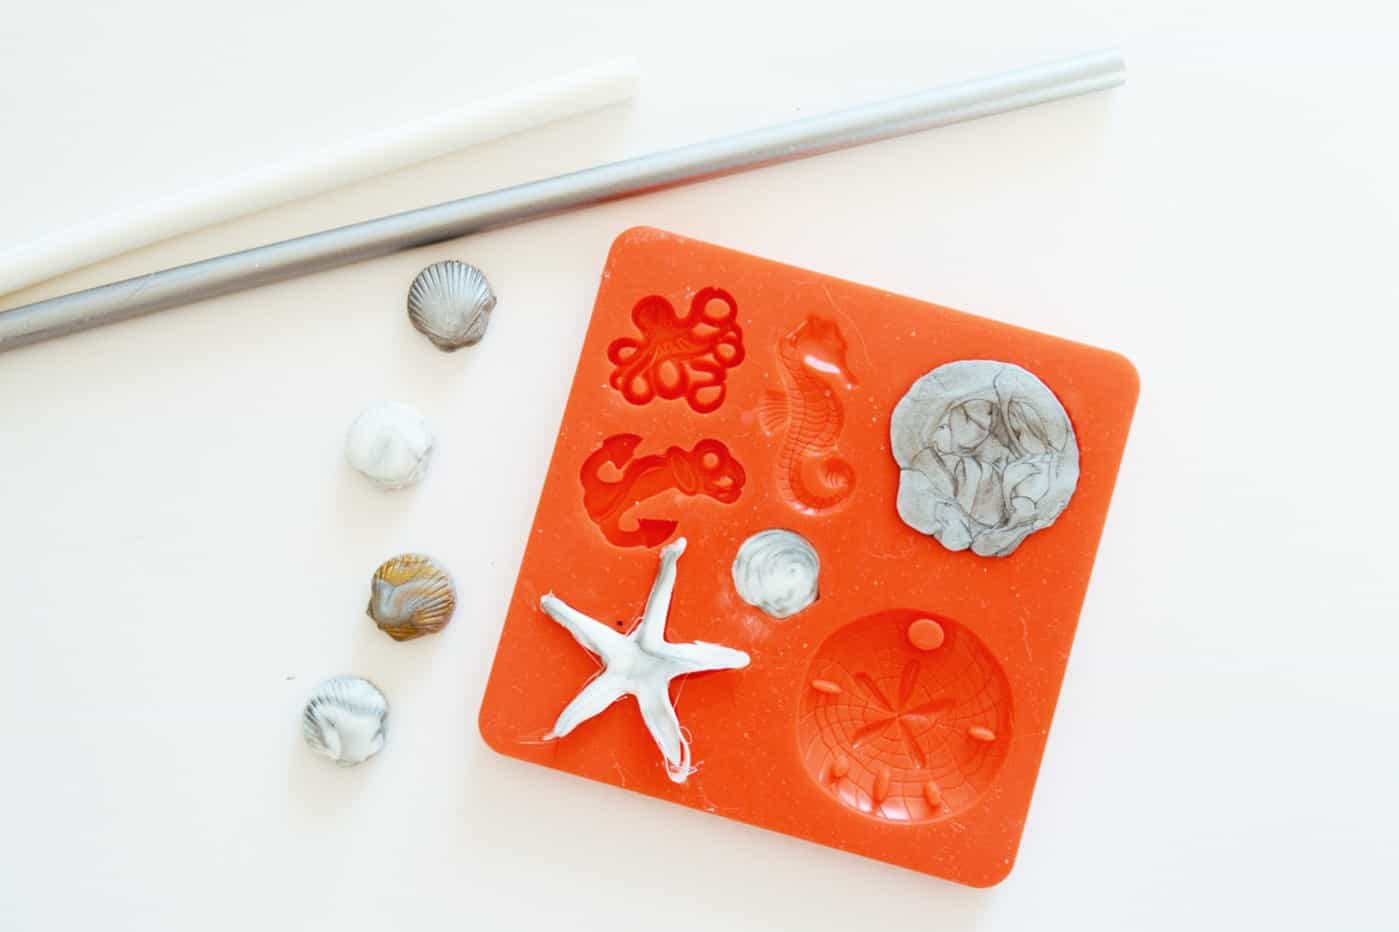 Hot glue sticks swirled into a beach themed silicone mold